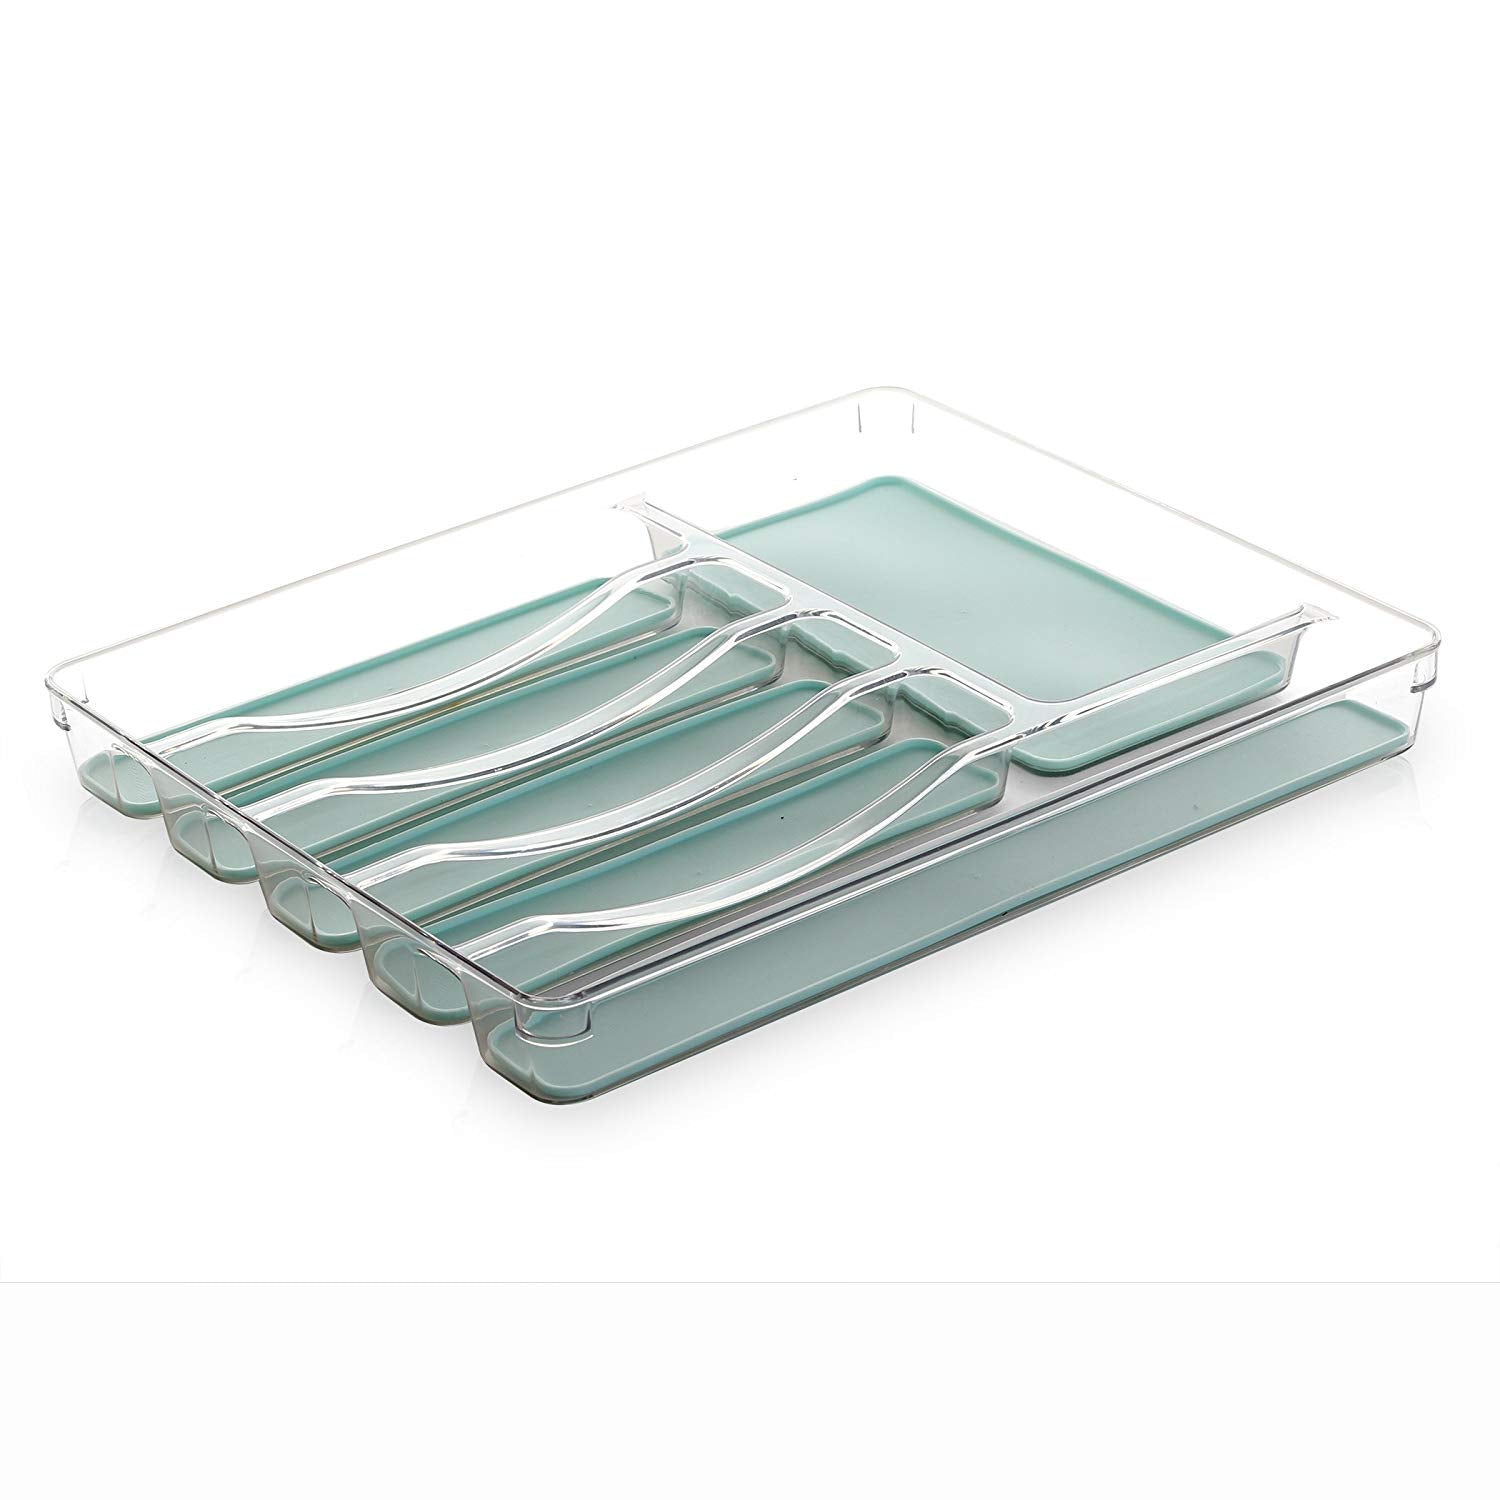 BINO 6-Slot Silverware Cutlery Tray Organizer, Aqua